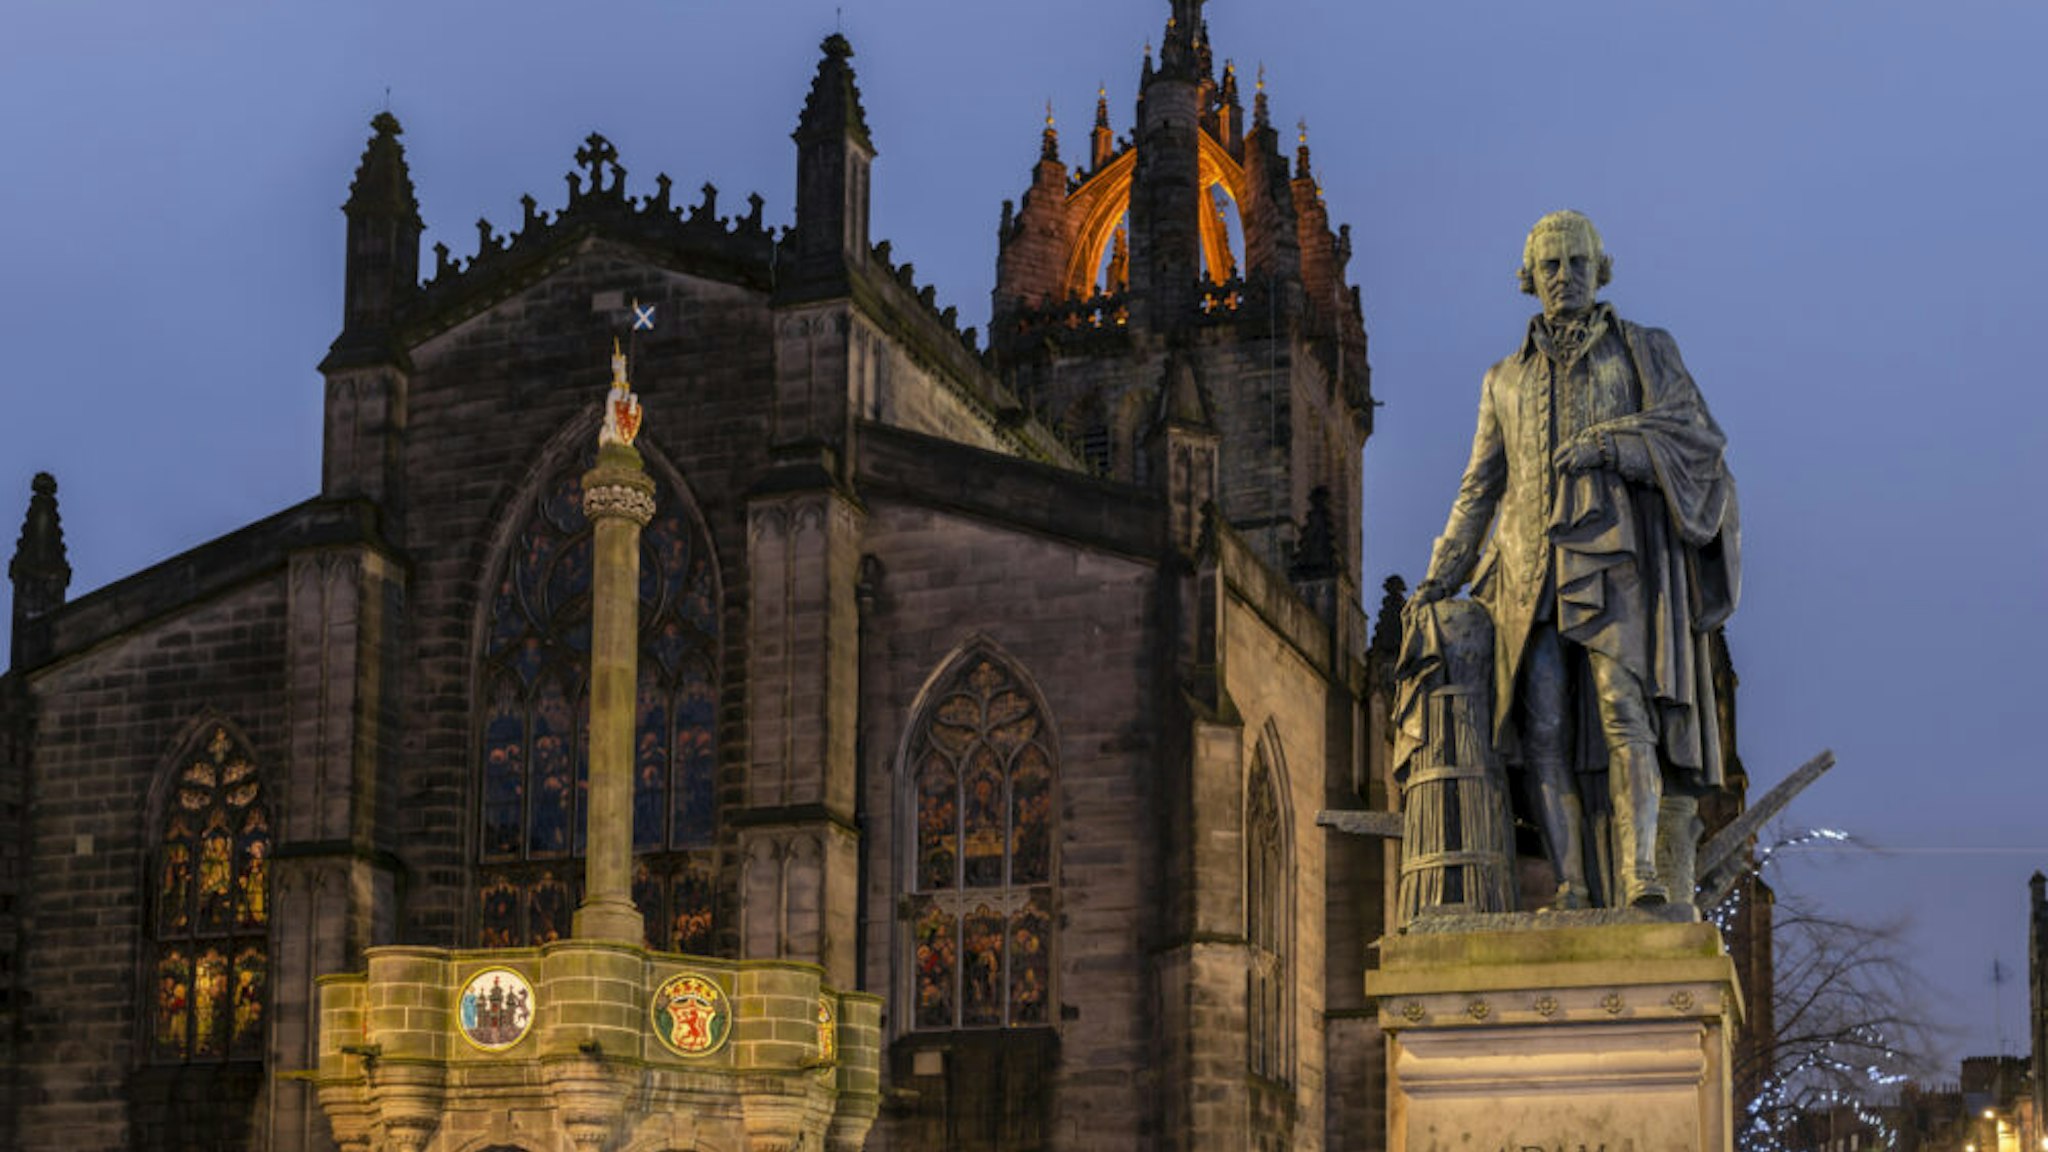 Adam Smith Monument, Gothic St Giles' Cathedral at dusk, Edinburgh, Scotland, United Kingdom